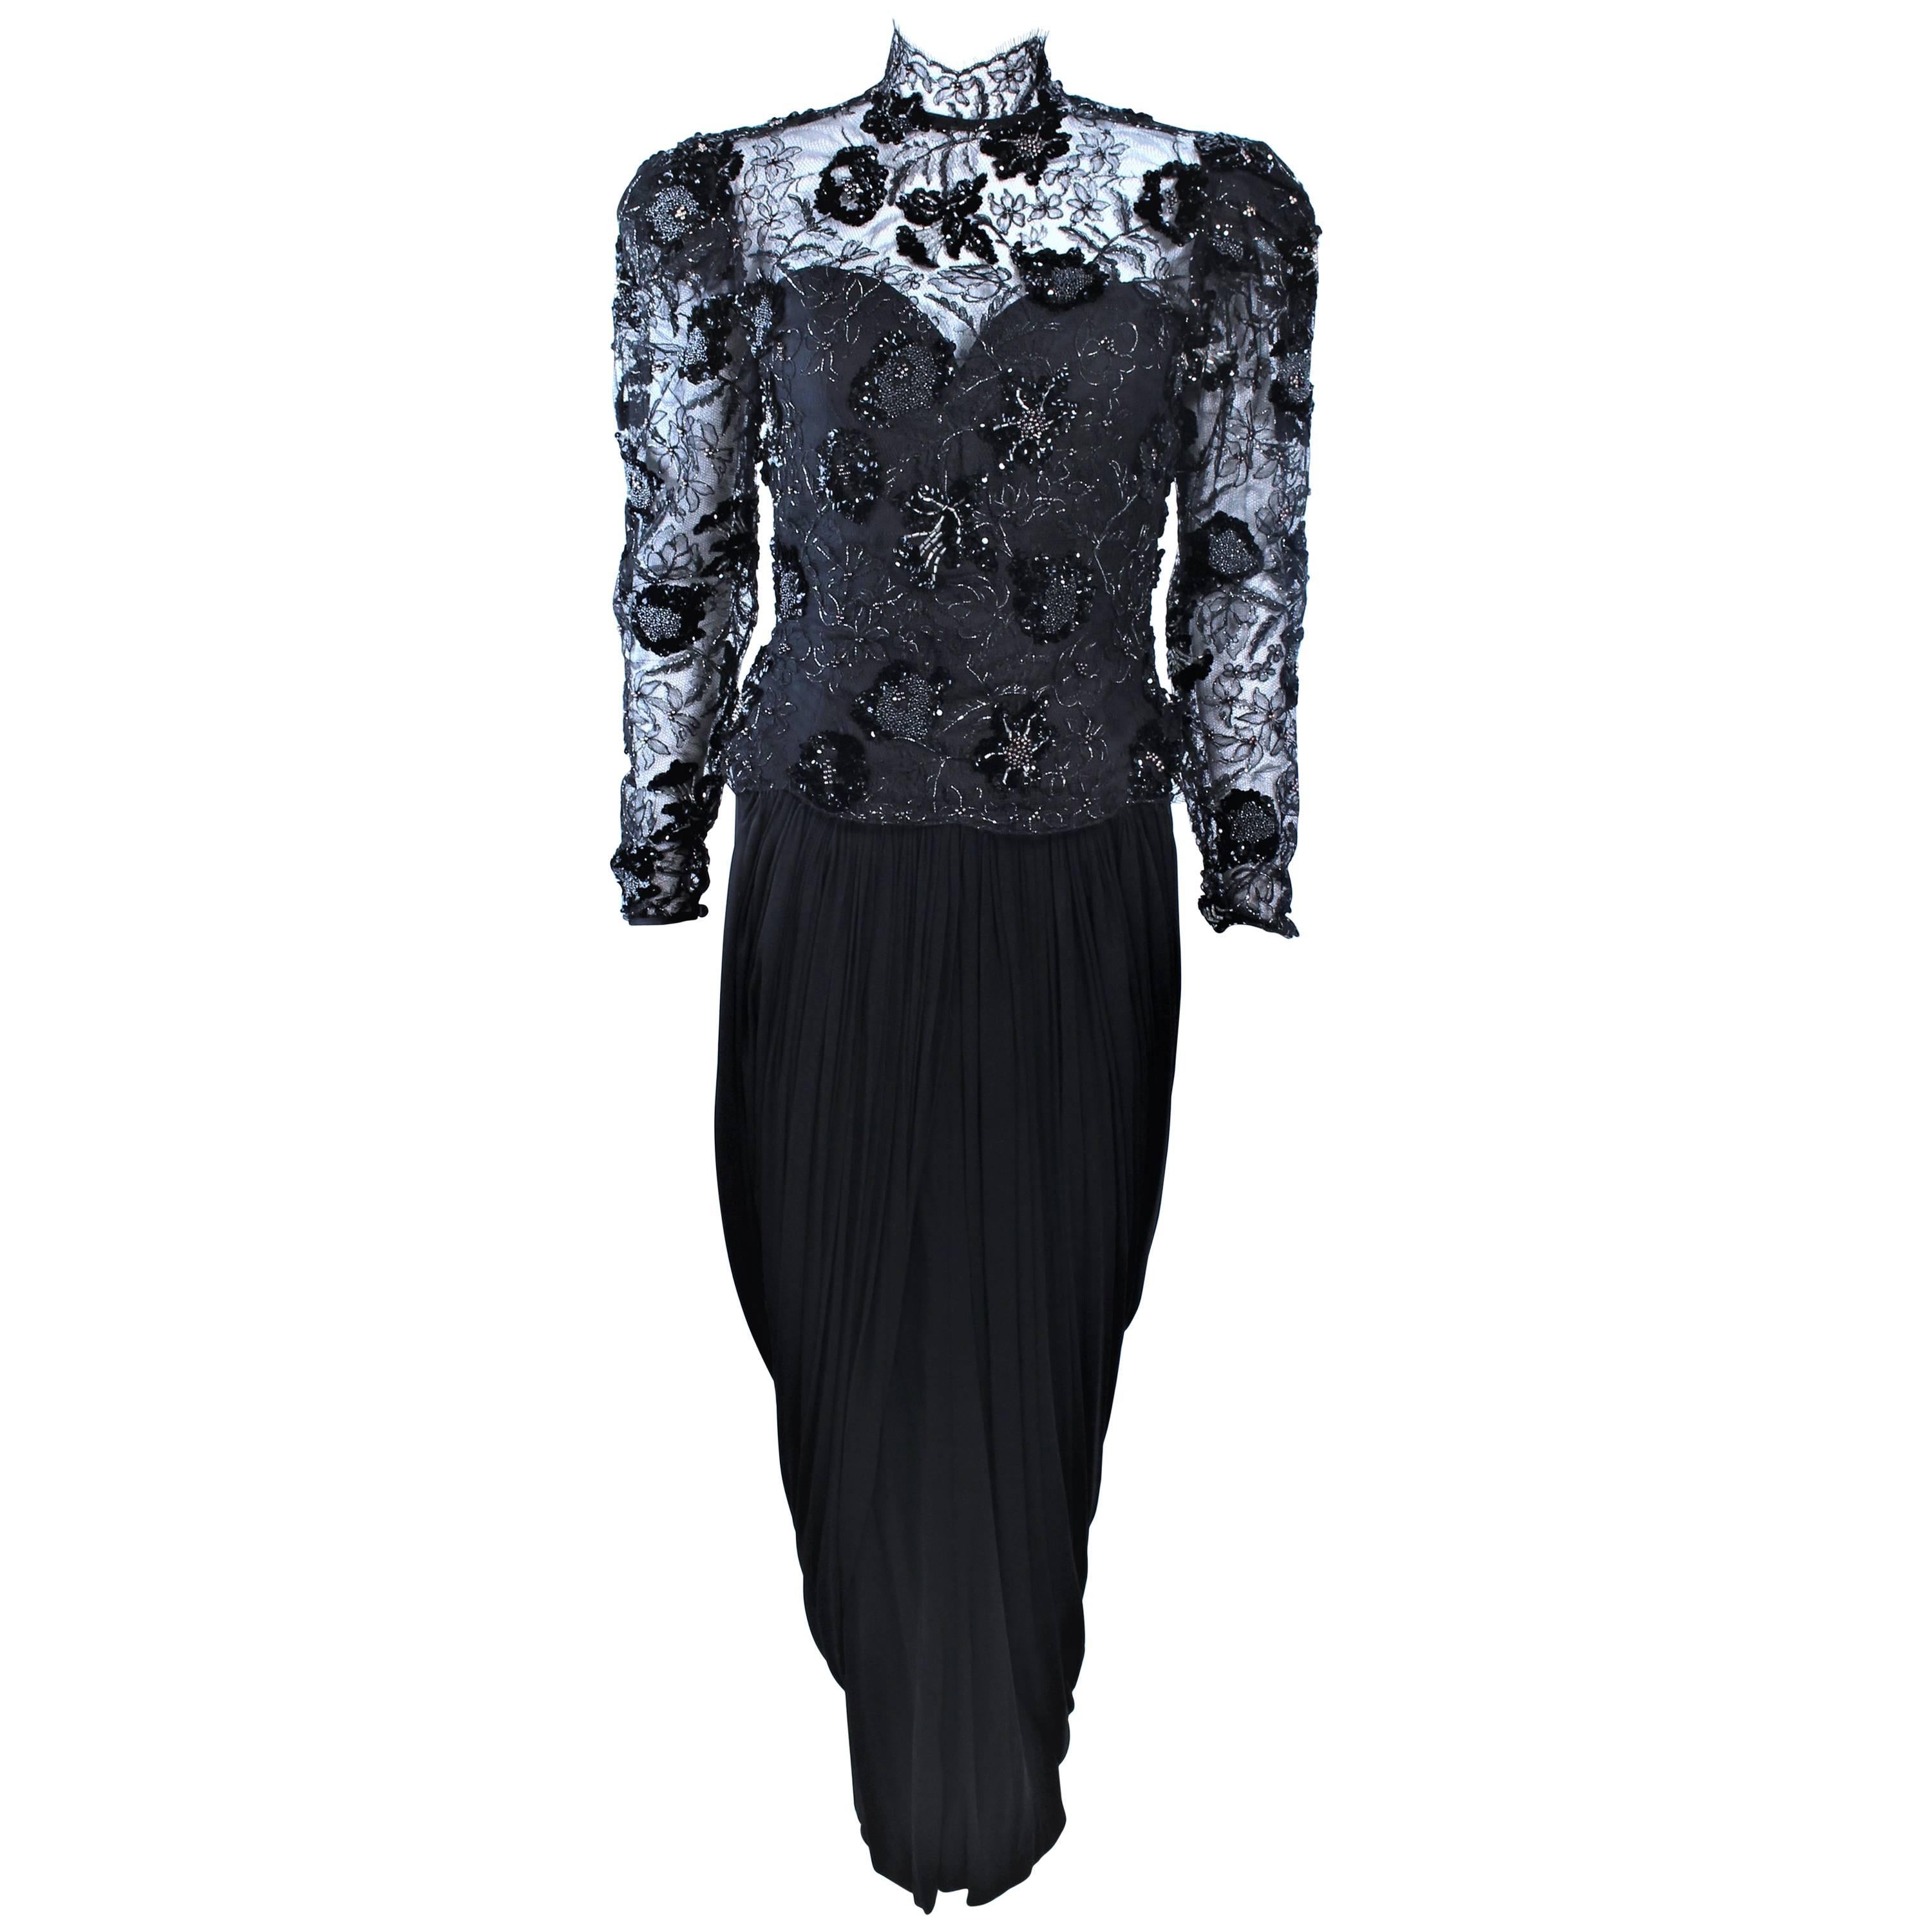 VICKY TIEL Black Lace Drape Gown with Sequin Applique Size 6